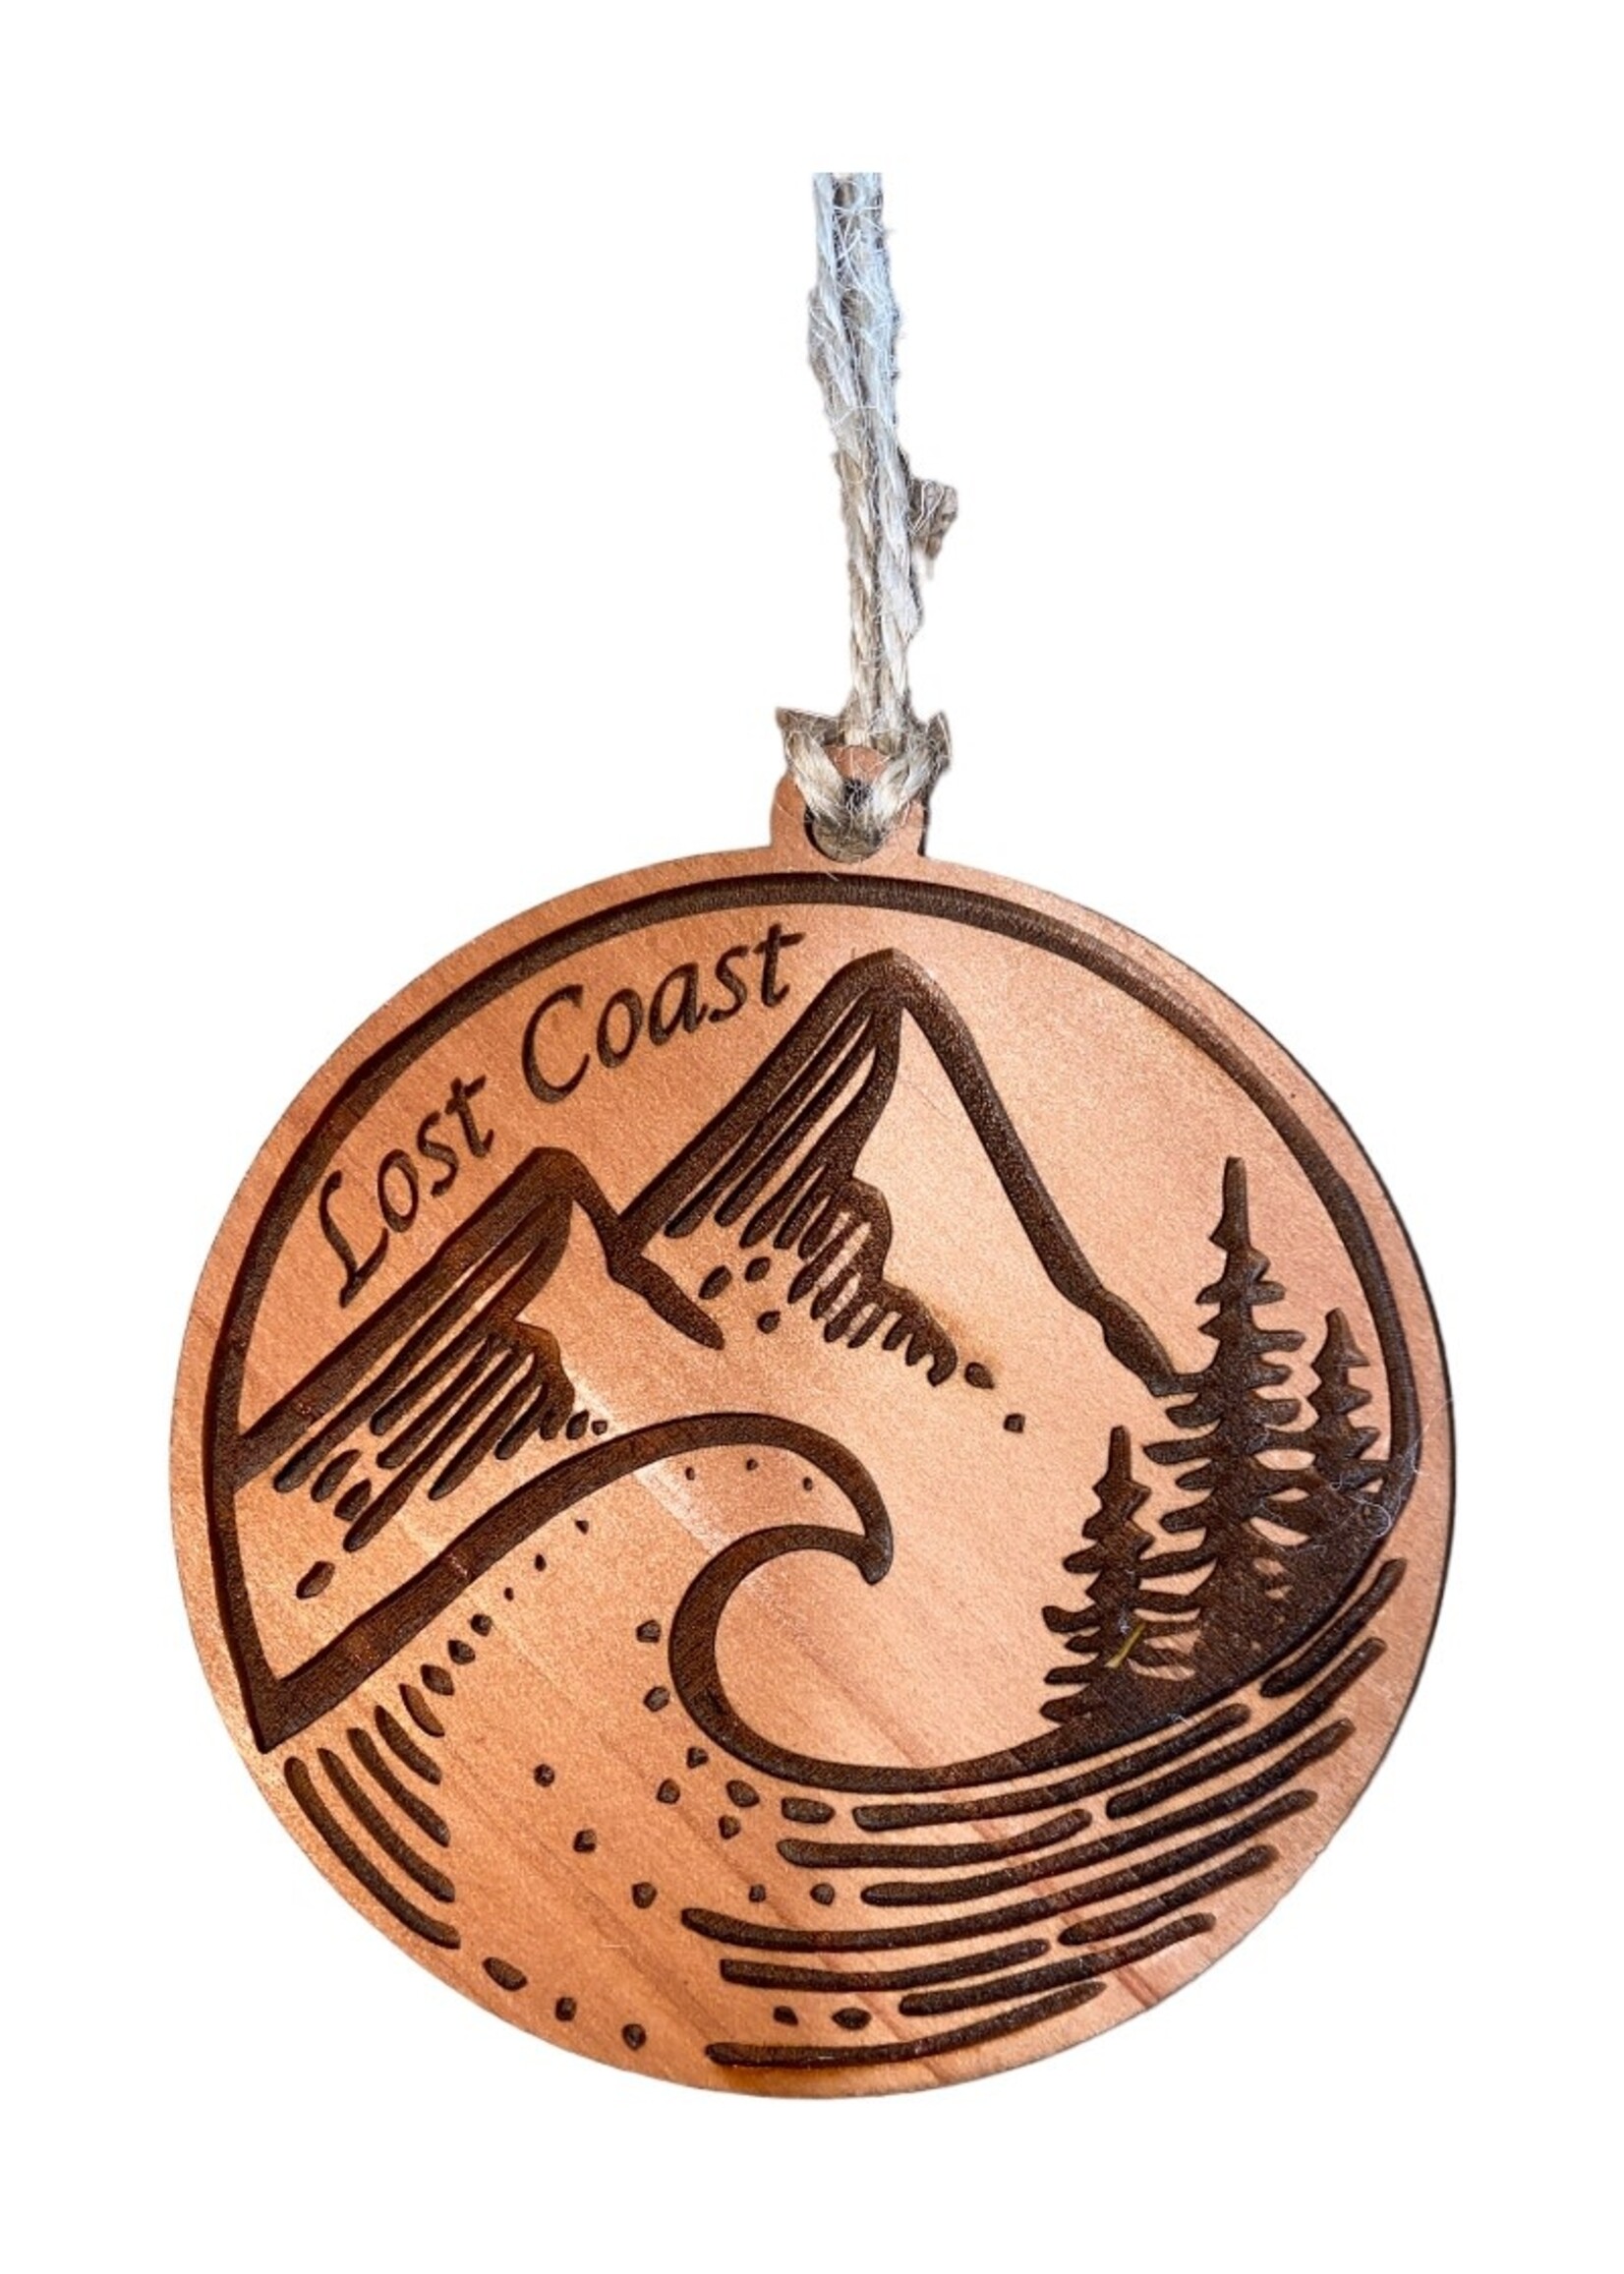 Grandfather Tree Redwood Ornament (Lost Coast)